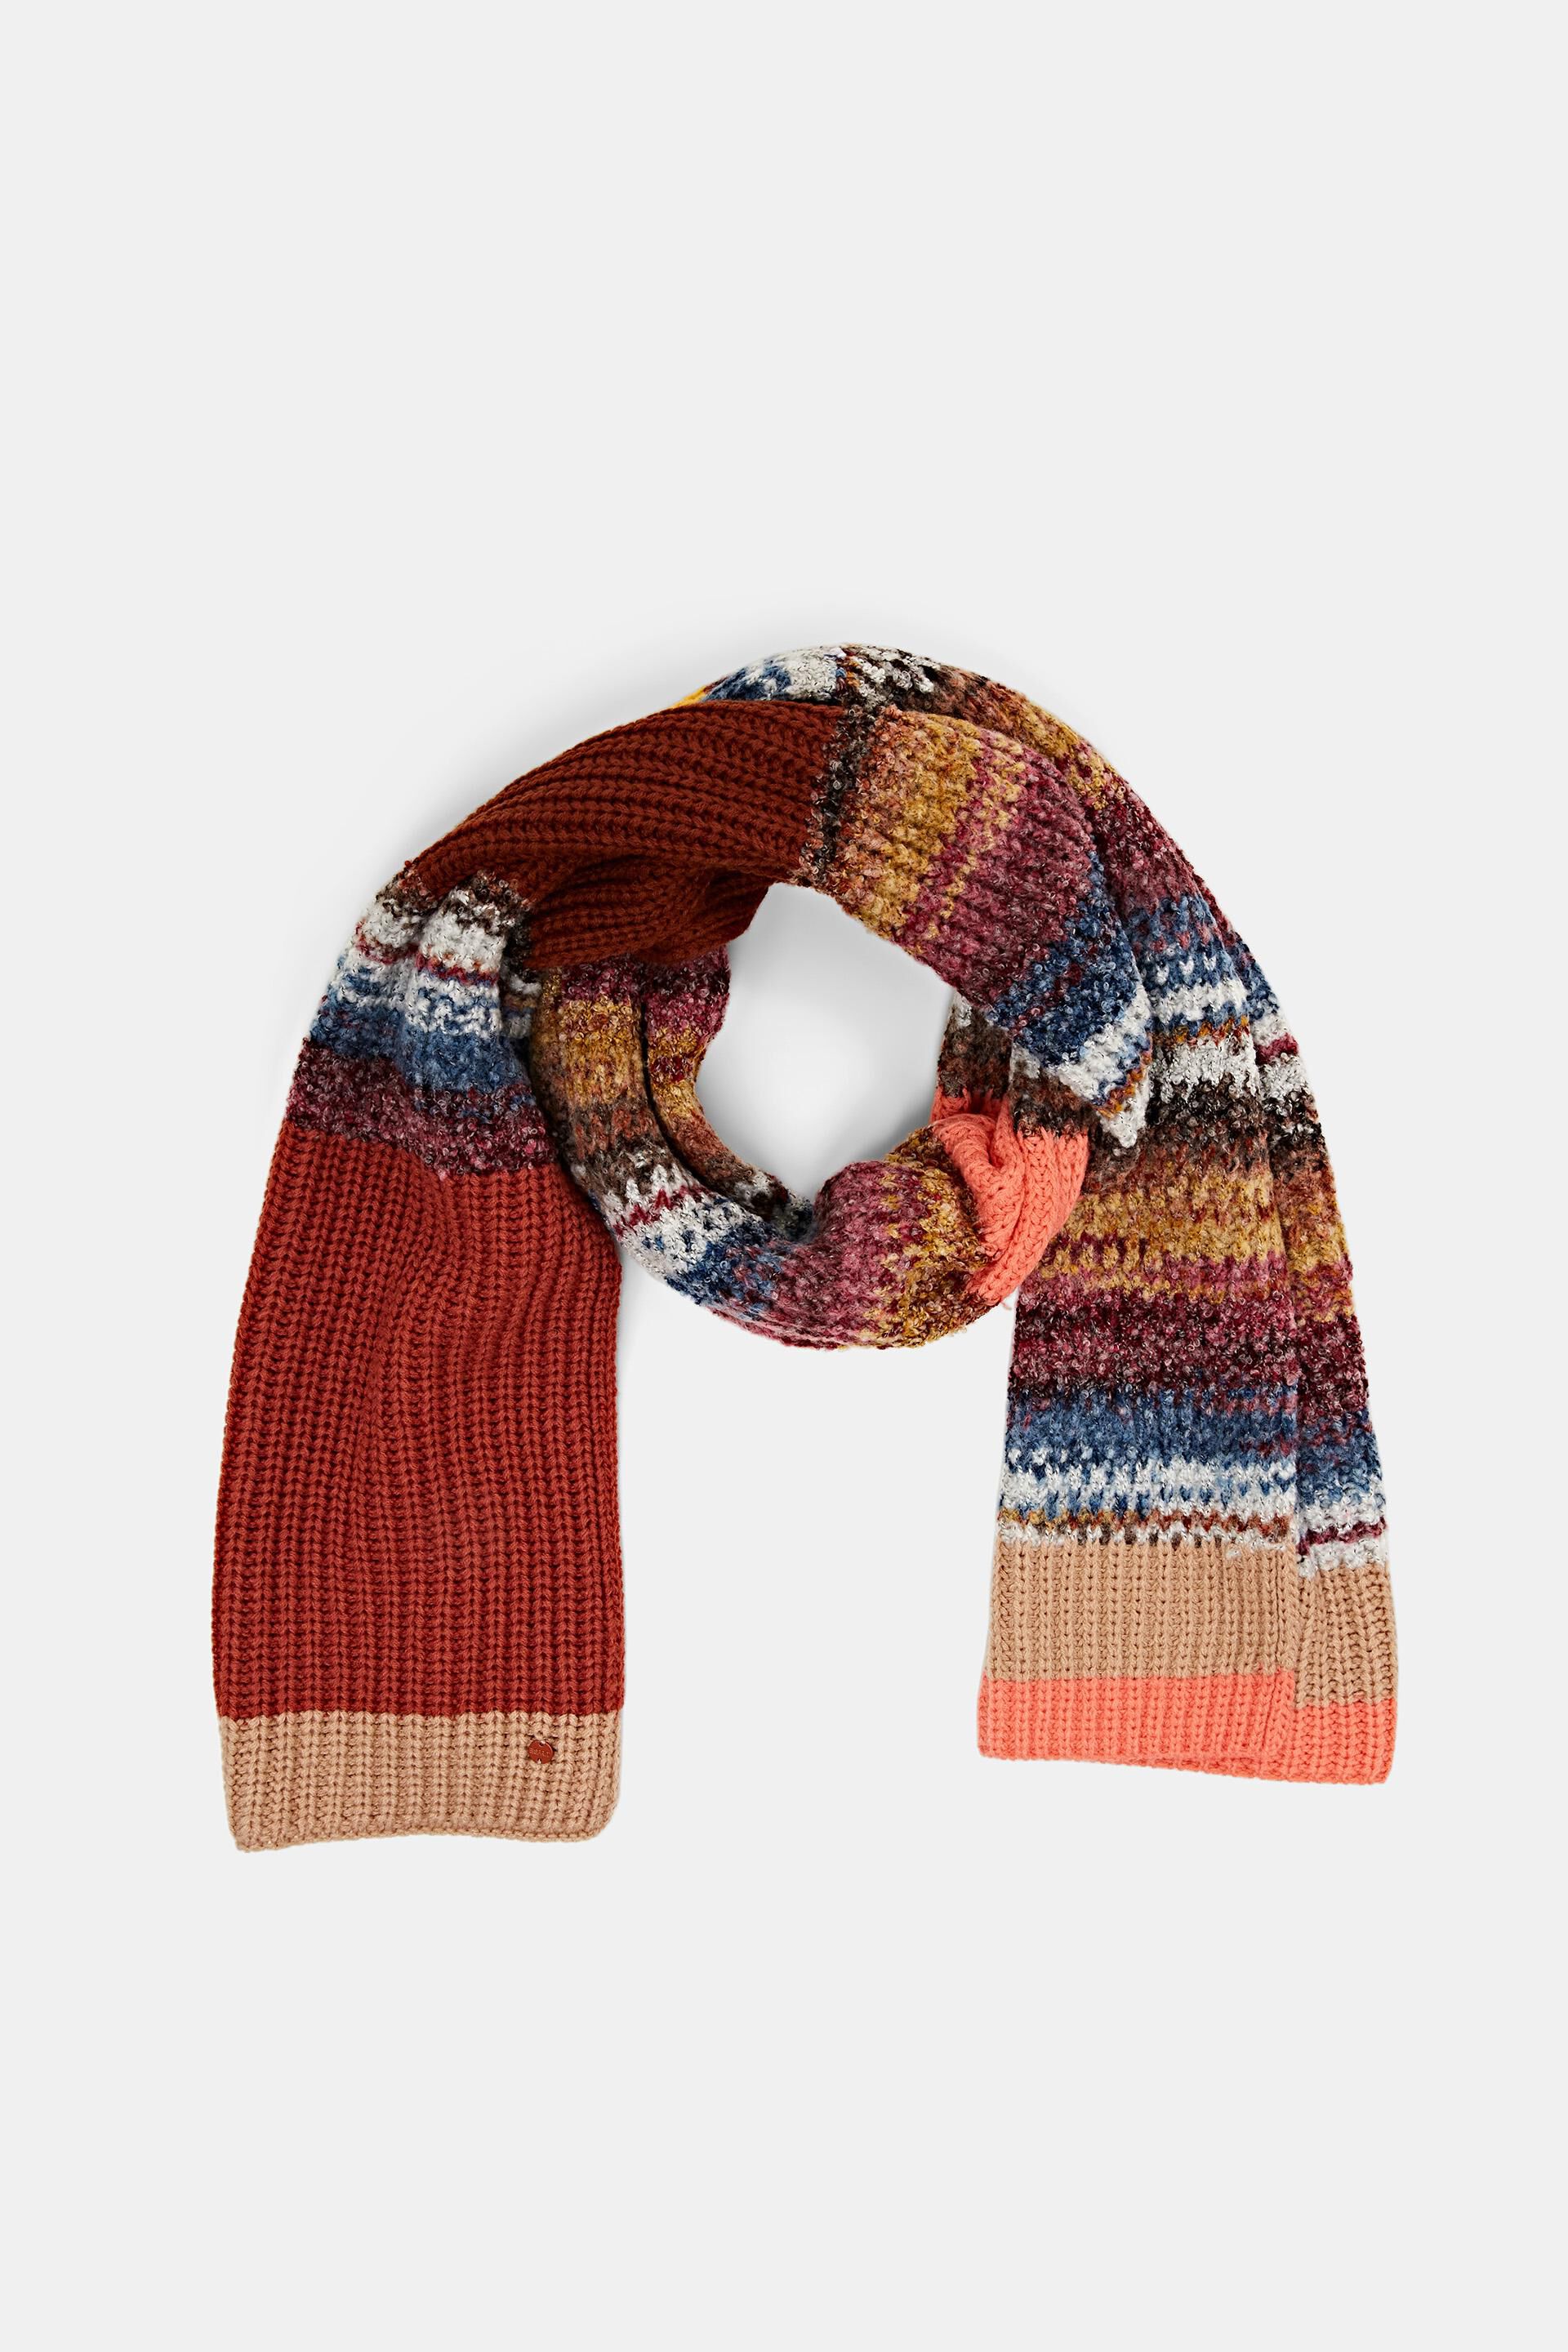 Esprit Multi-coloured wool scarf, knit blend